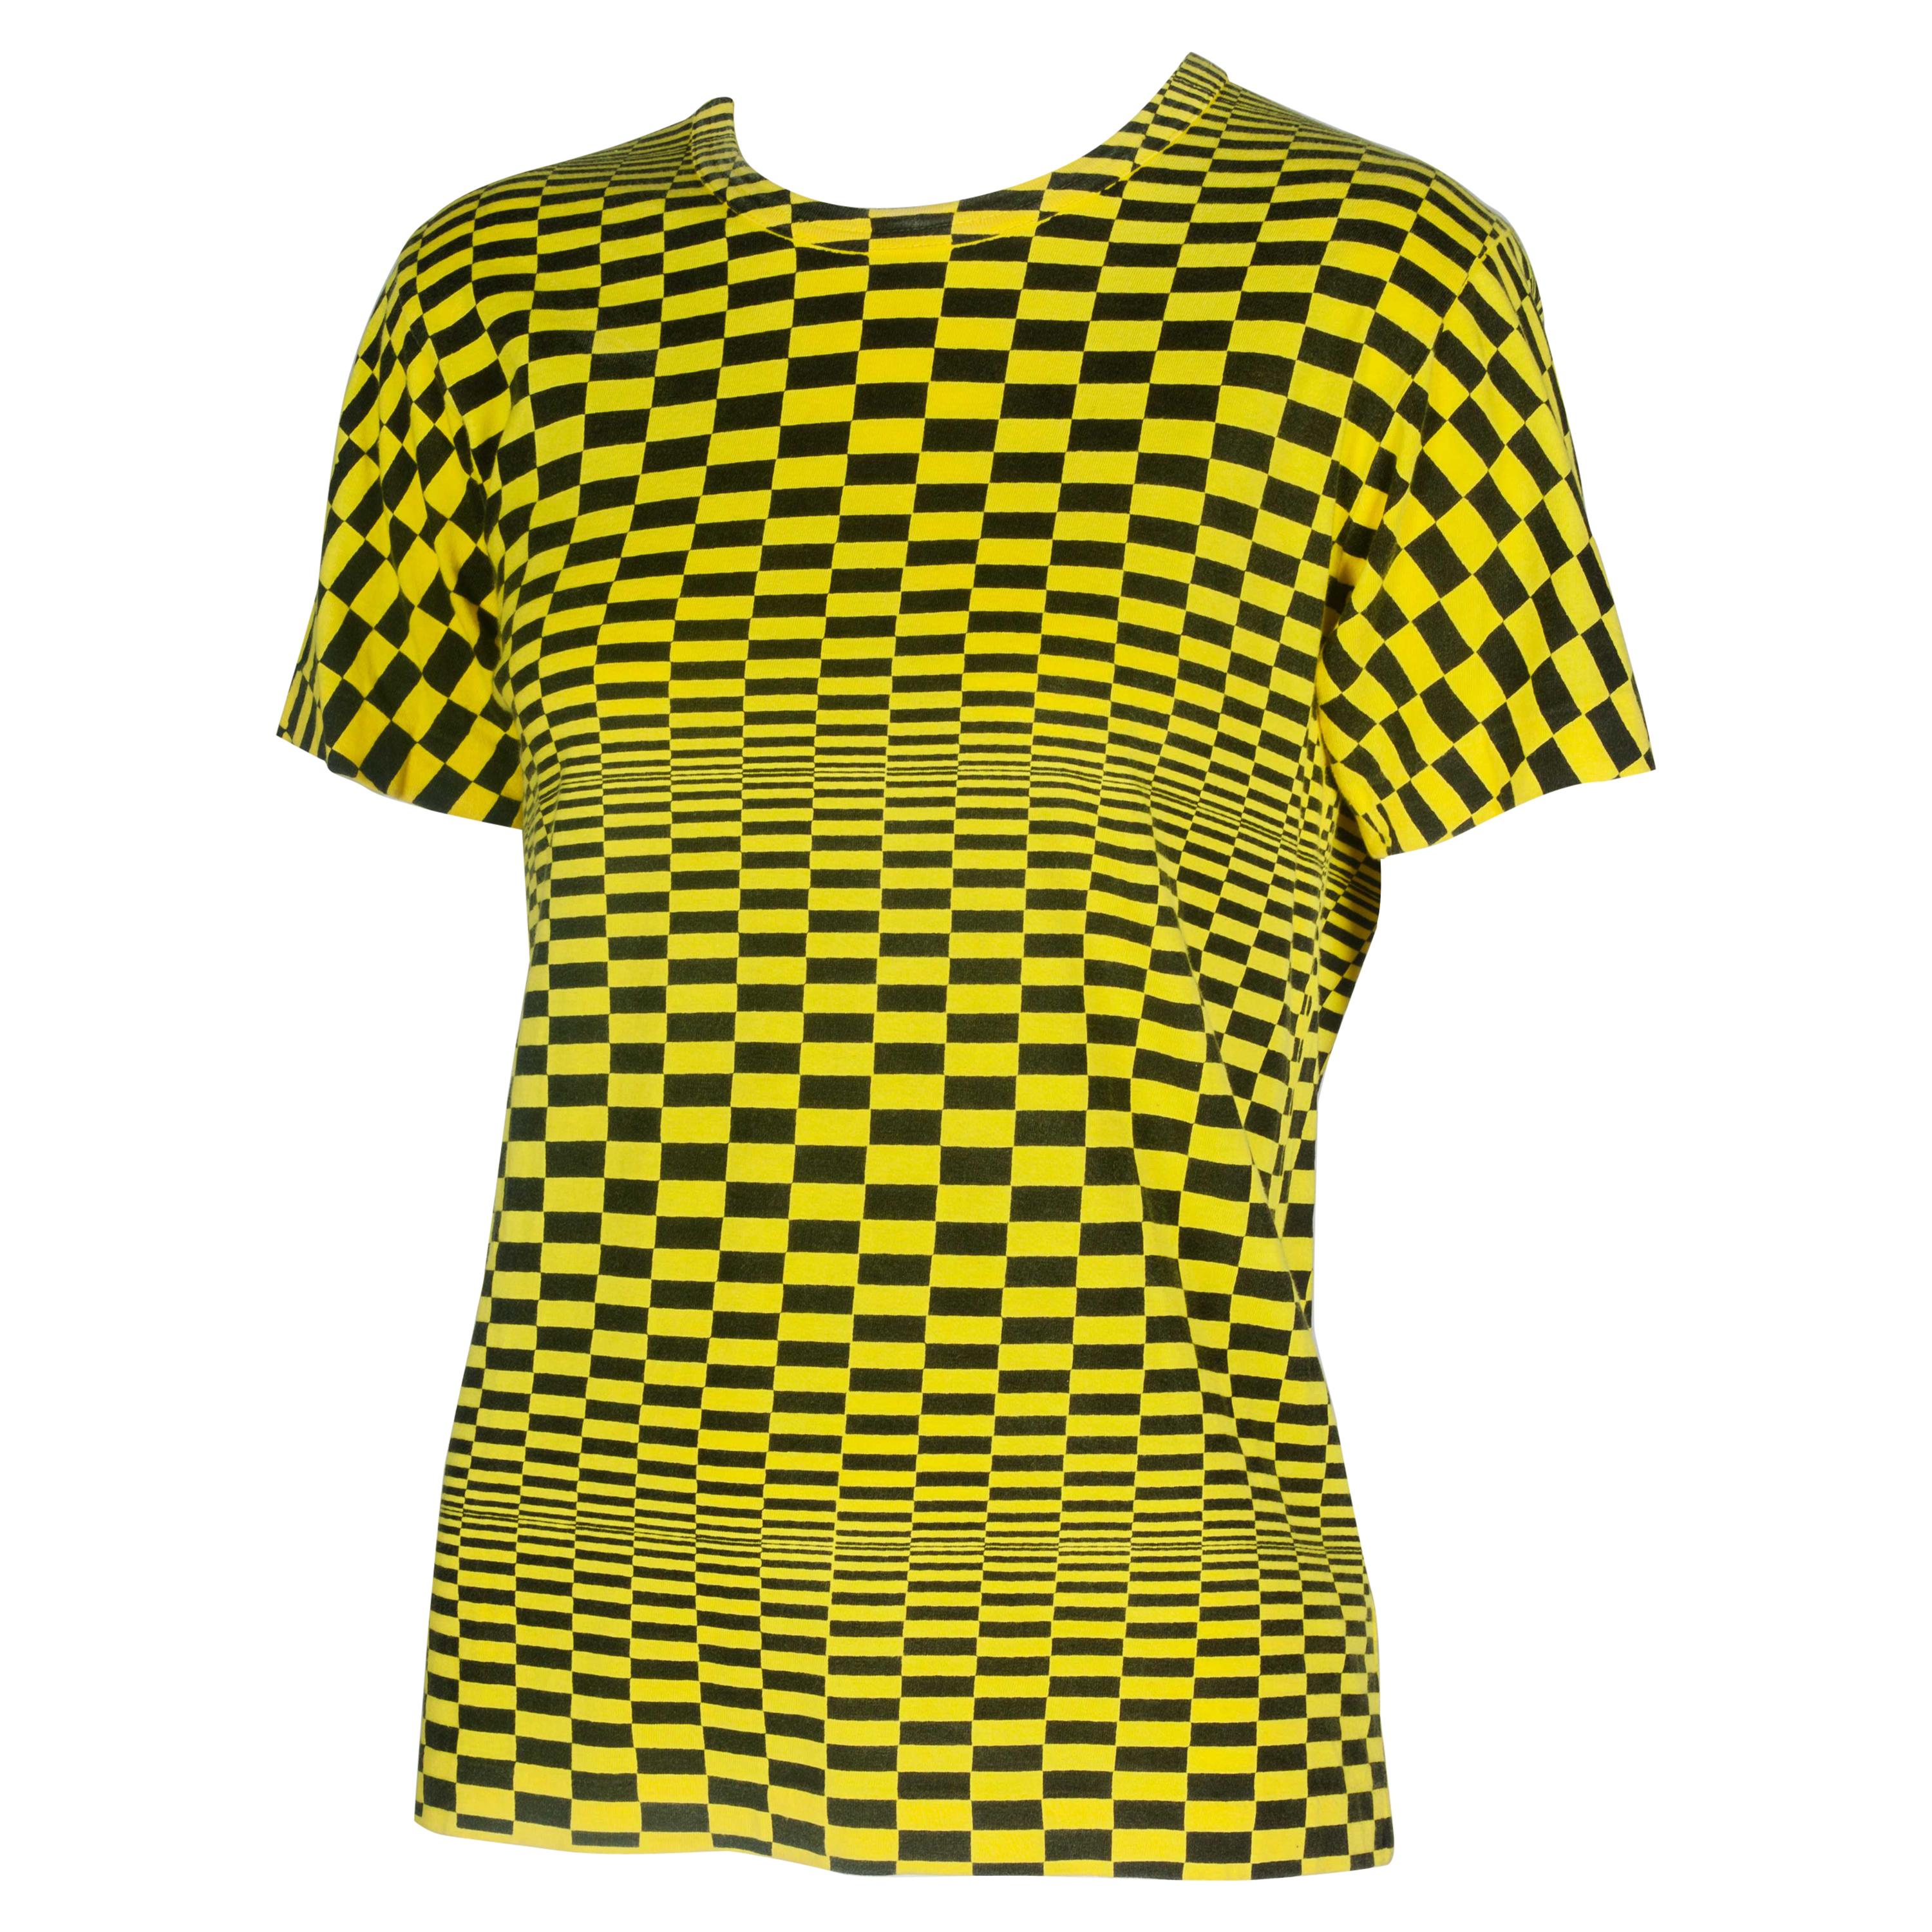 Comme des Garçons Yellow and Black Checkered T-shirt, 2000